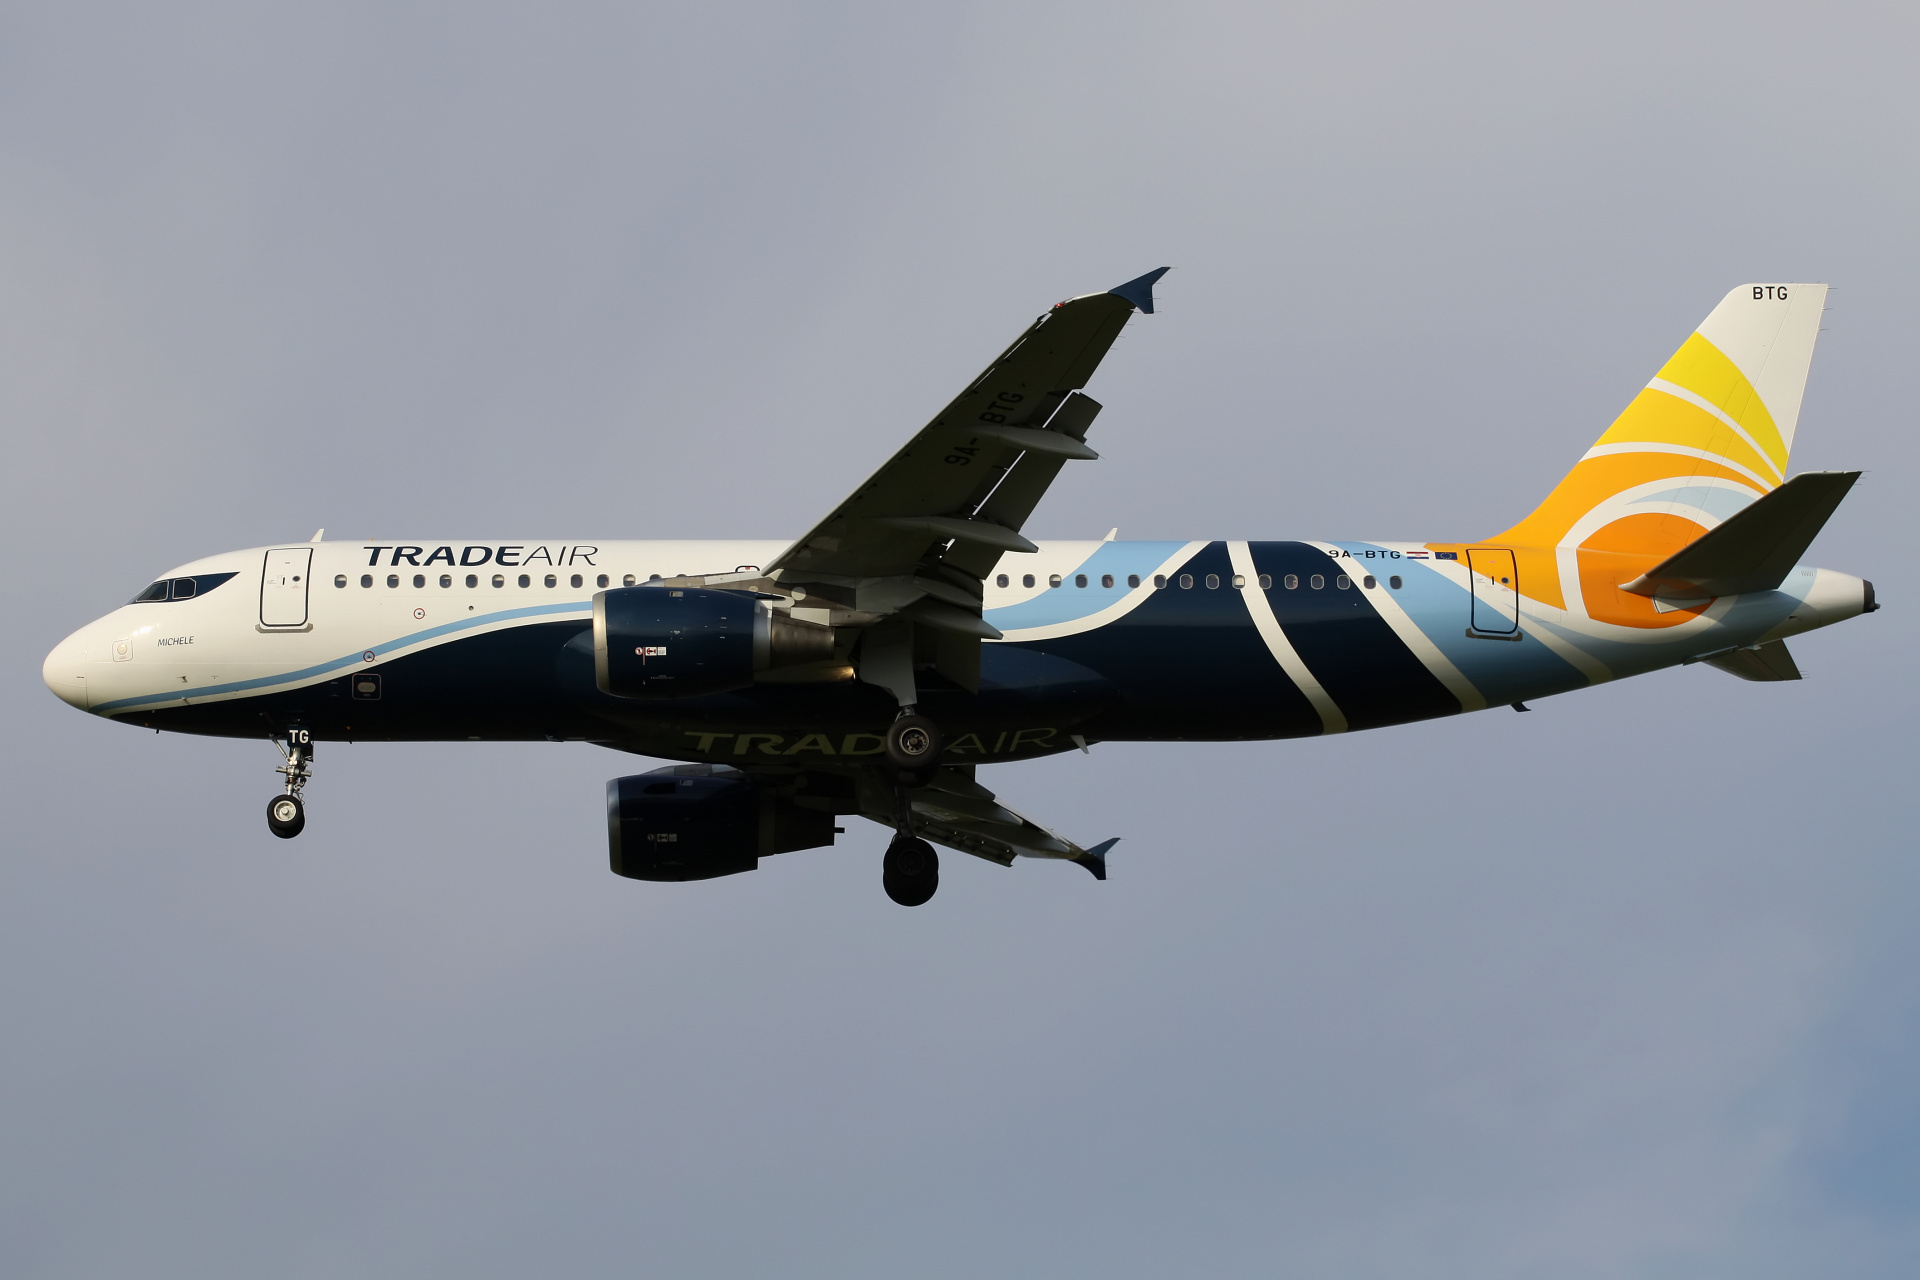 9A-BTG, Trade Air (Aircraft » EPWA Spotting » Airbus A320-200)